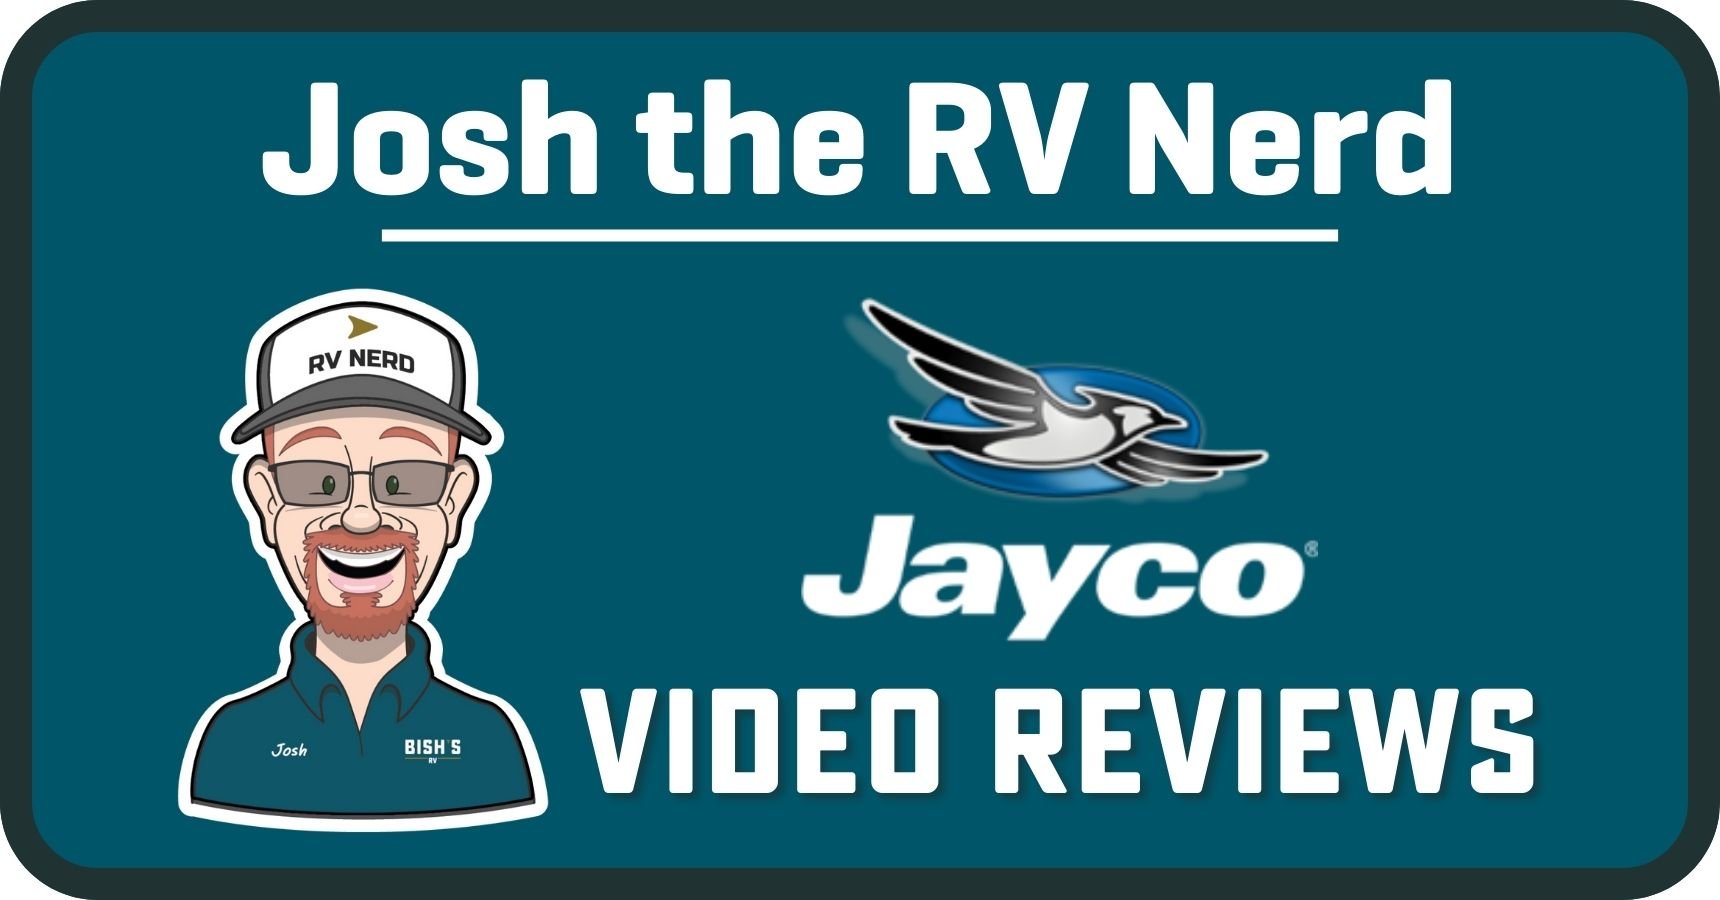 See Josh the RV Nerd Video Reviews